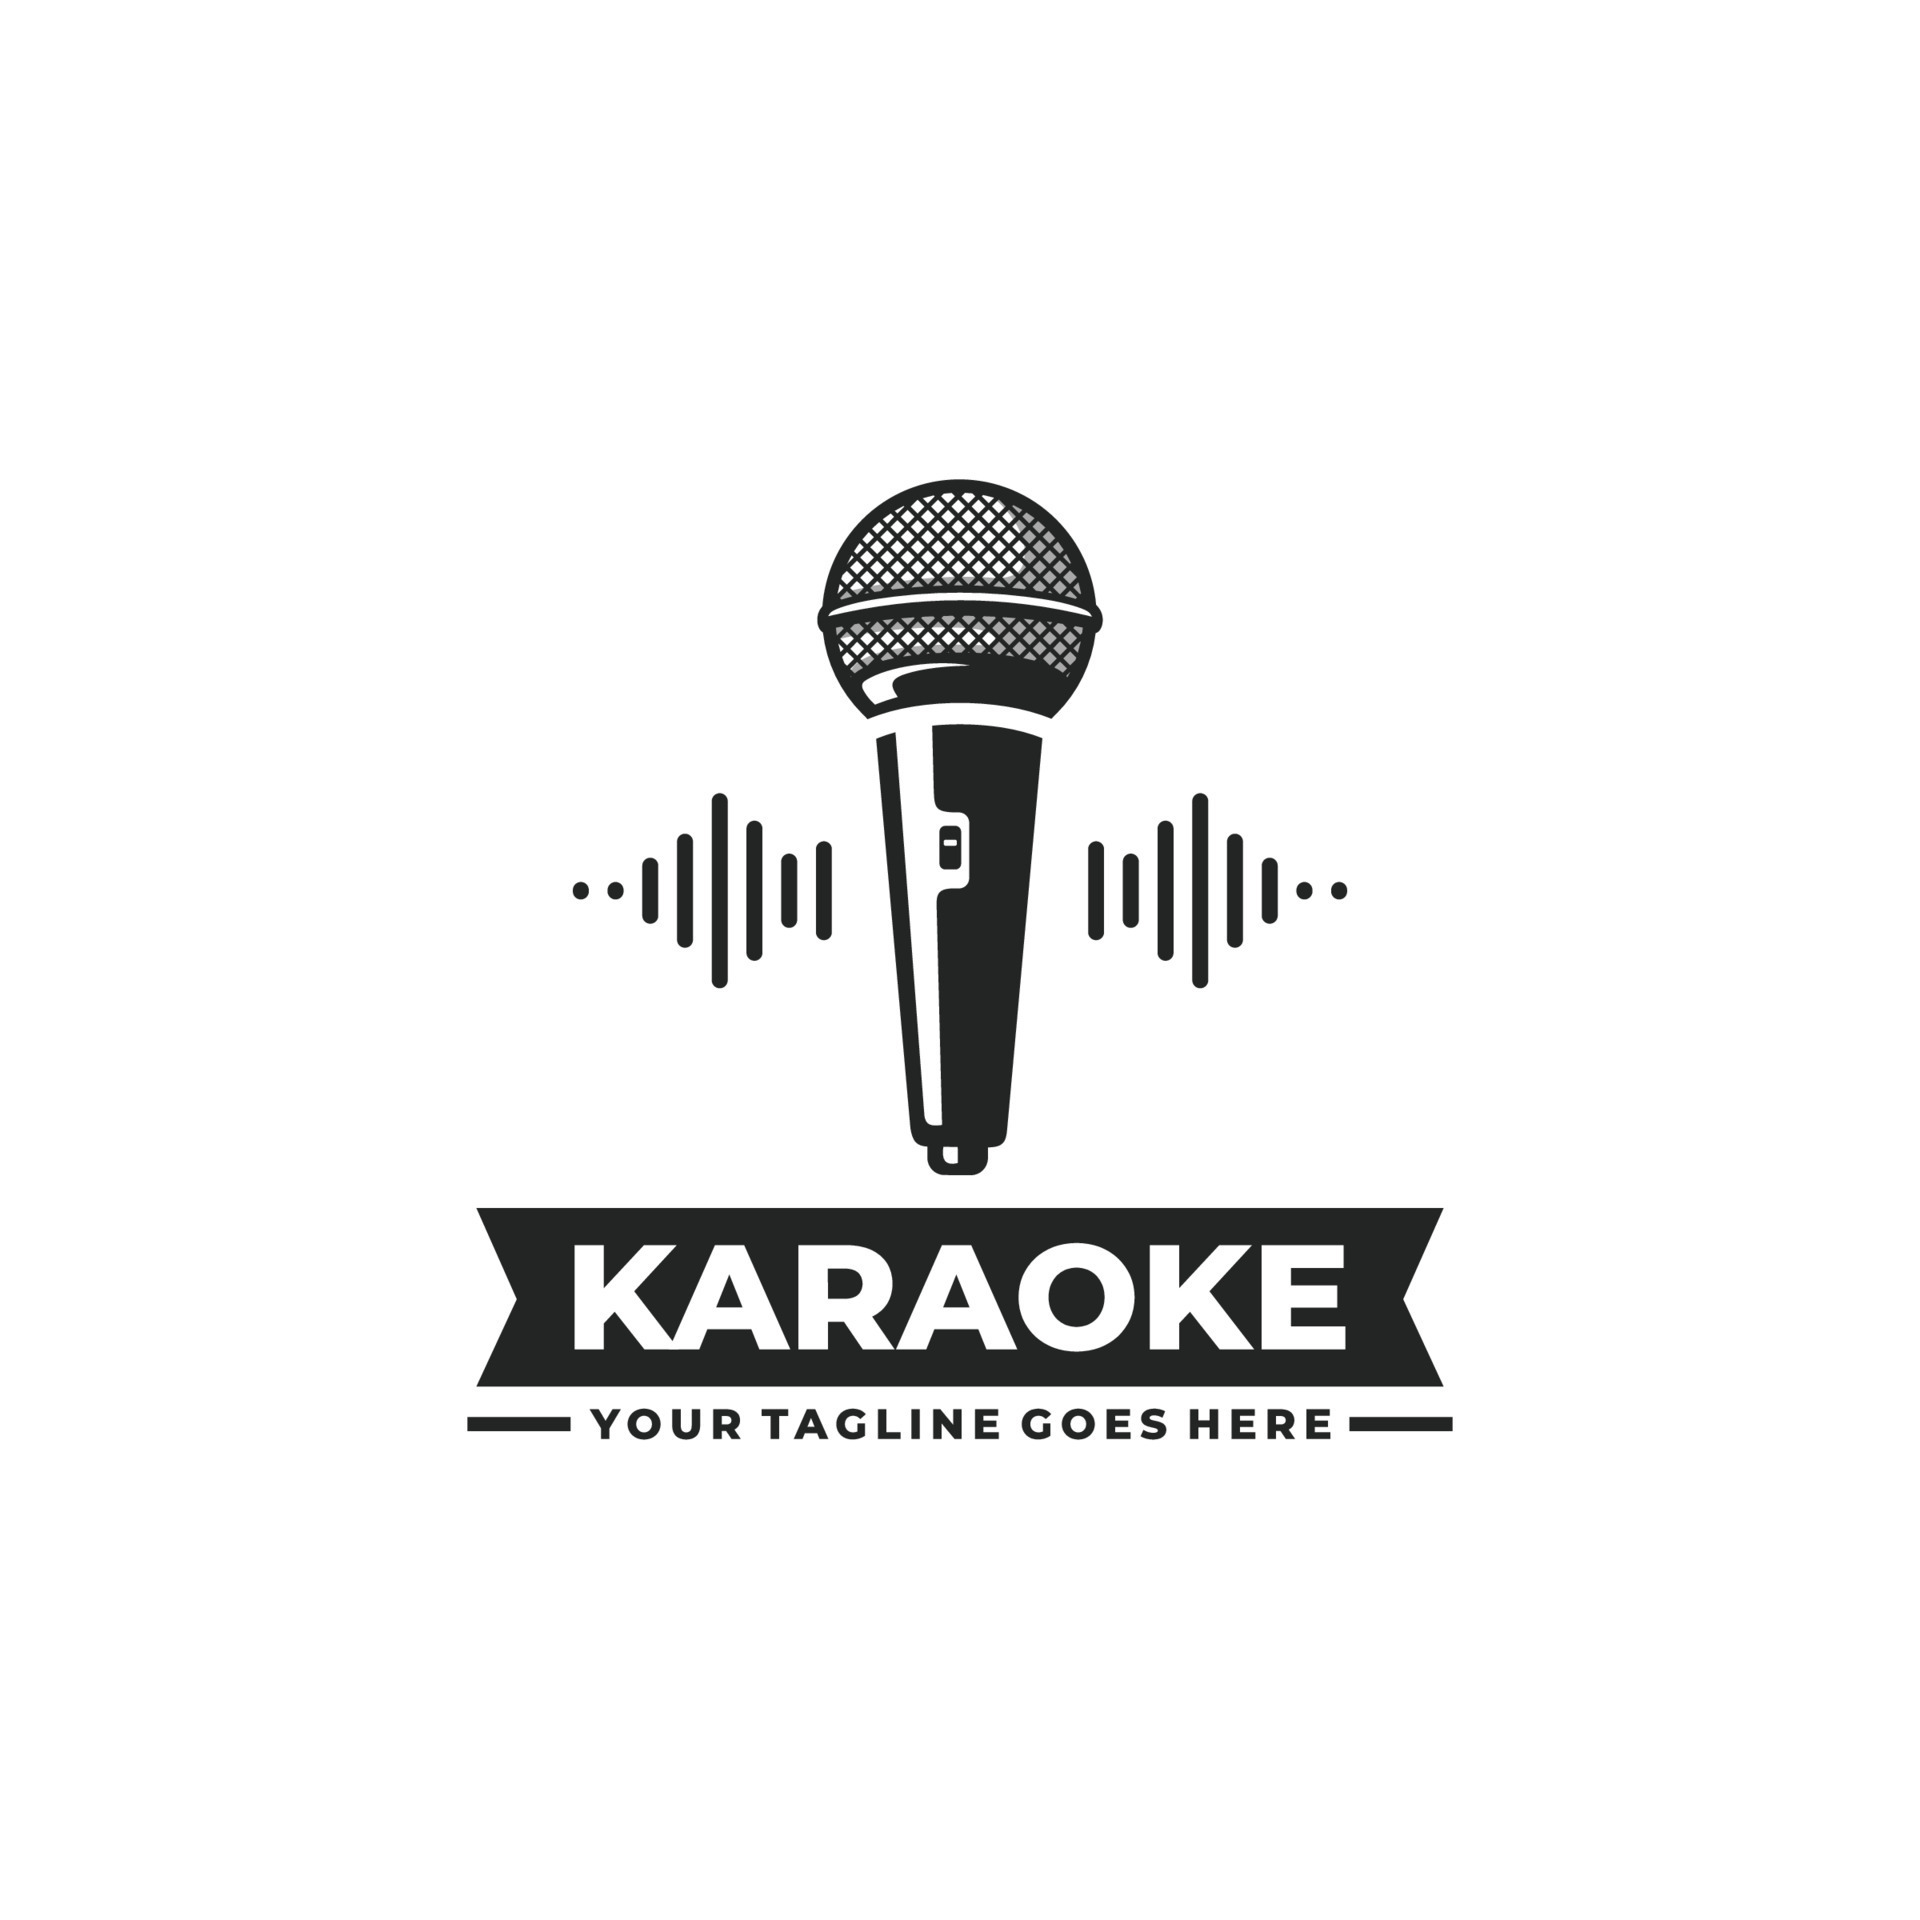 Karaoke logo design vector 11954858 Vector Art at Vecteezy